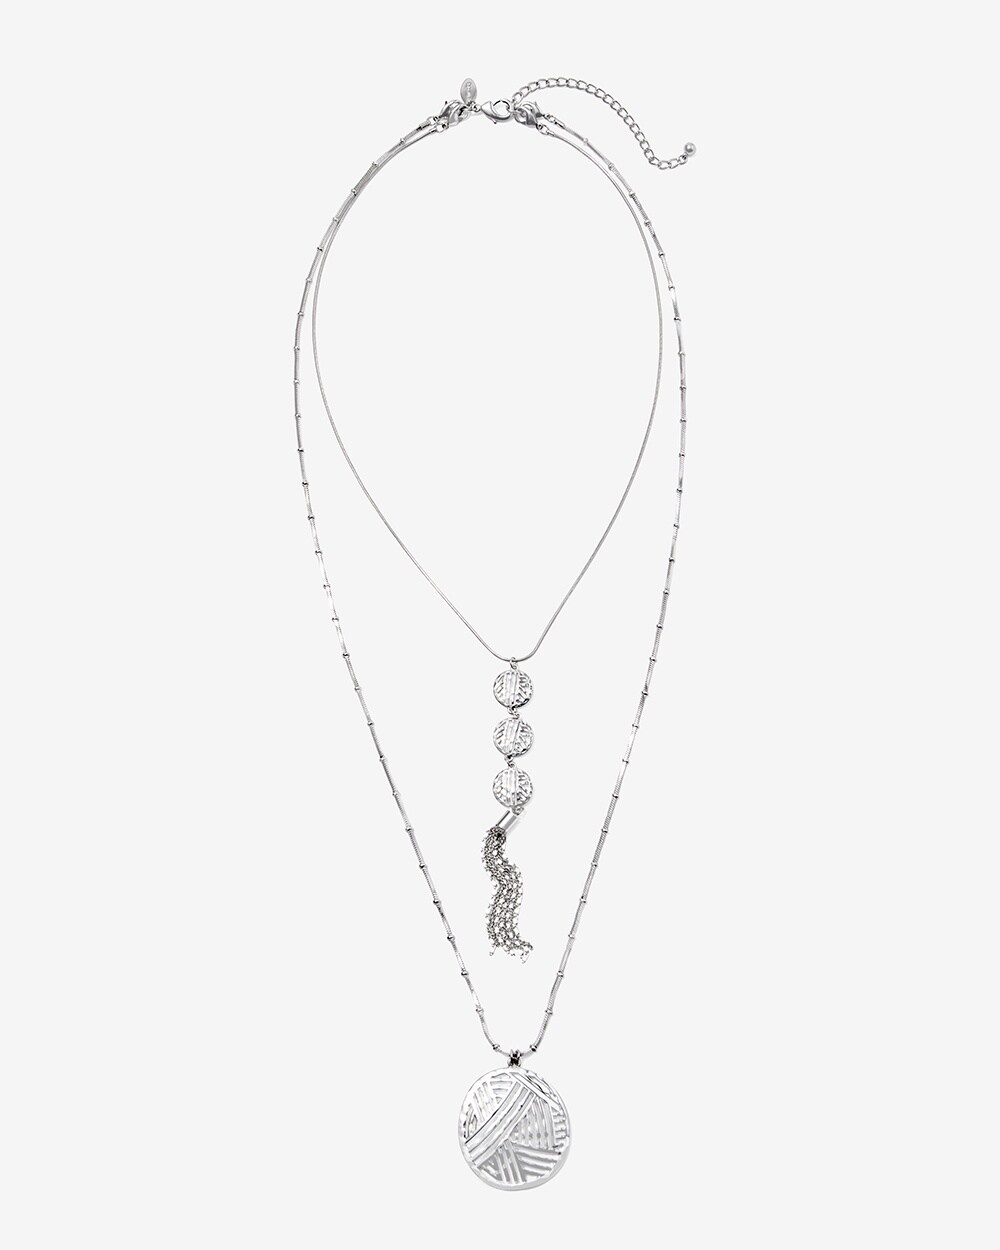 Line Work Removable Tassel Pendant Necklace